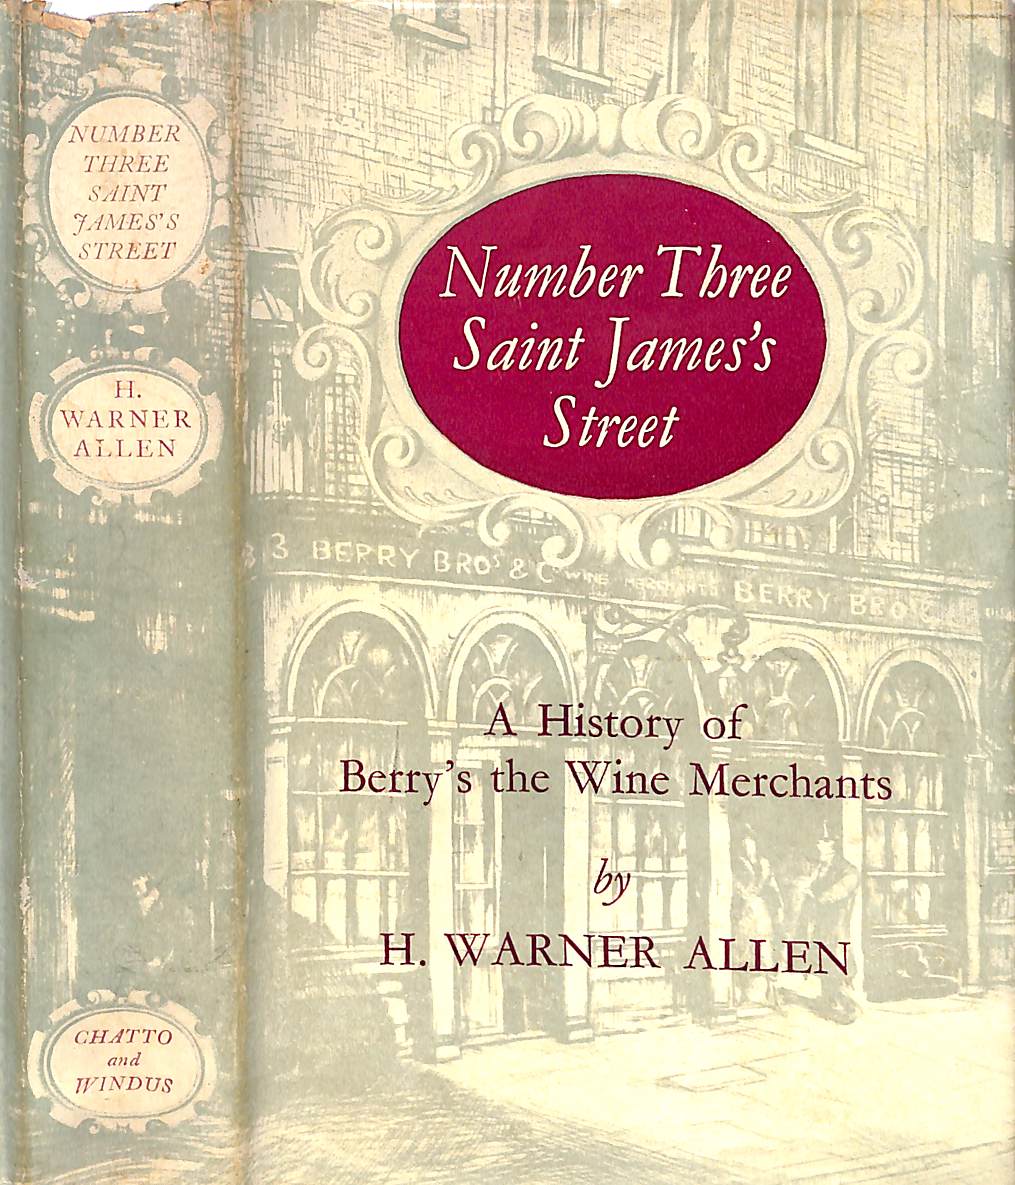 "Number Three Saint James's Street: A History Of Berry's The Wine Merchants" 1950 ALLEN, H. Warner